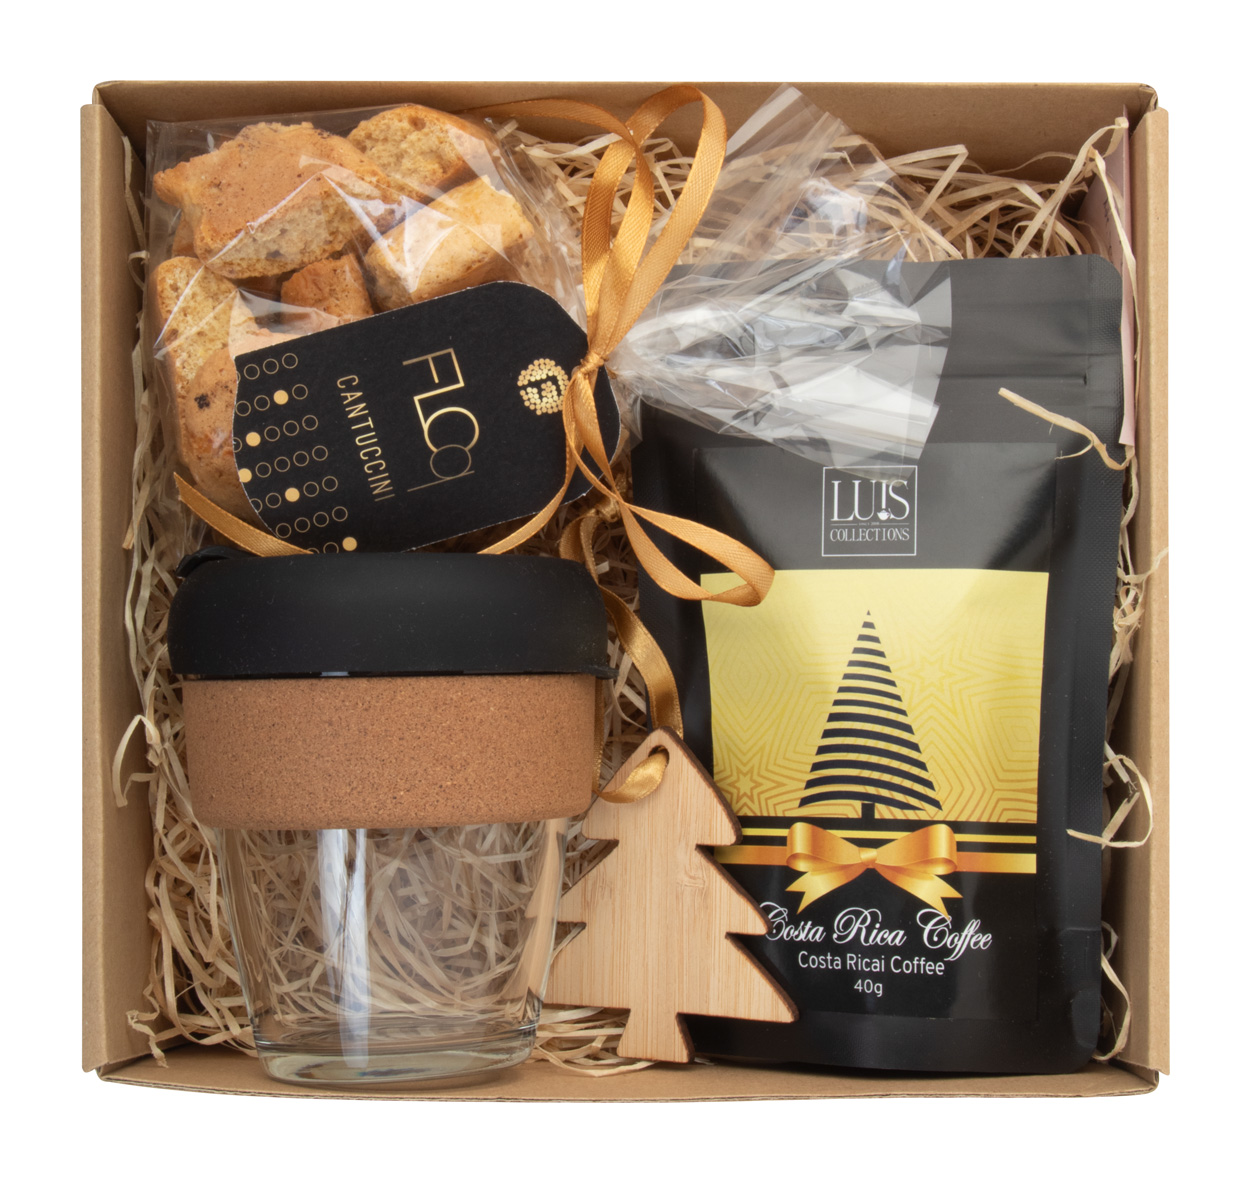 Orosi coffee gift set